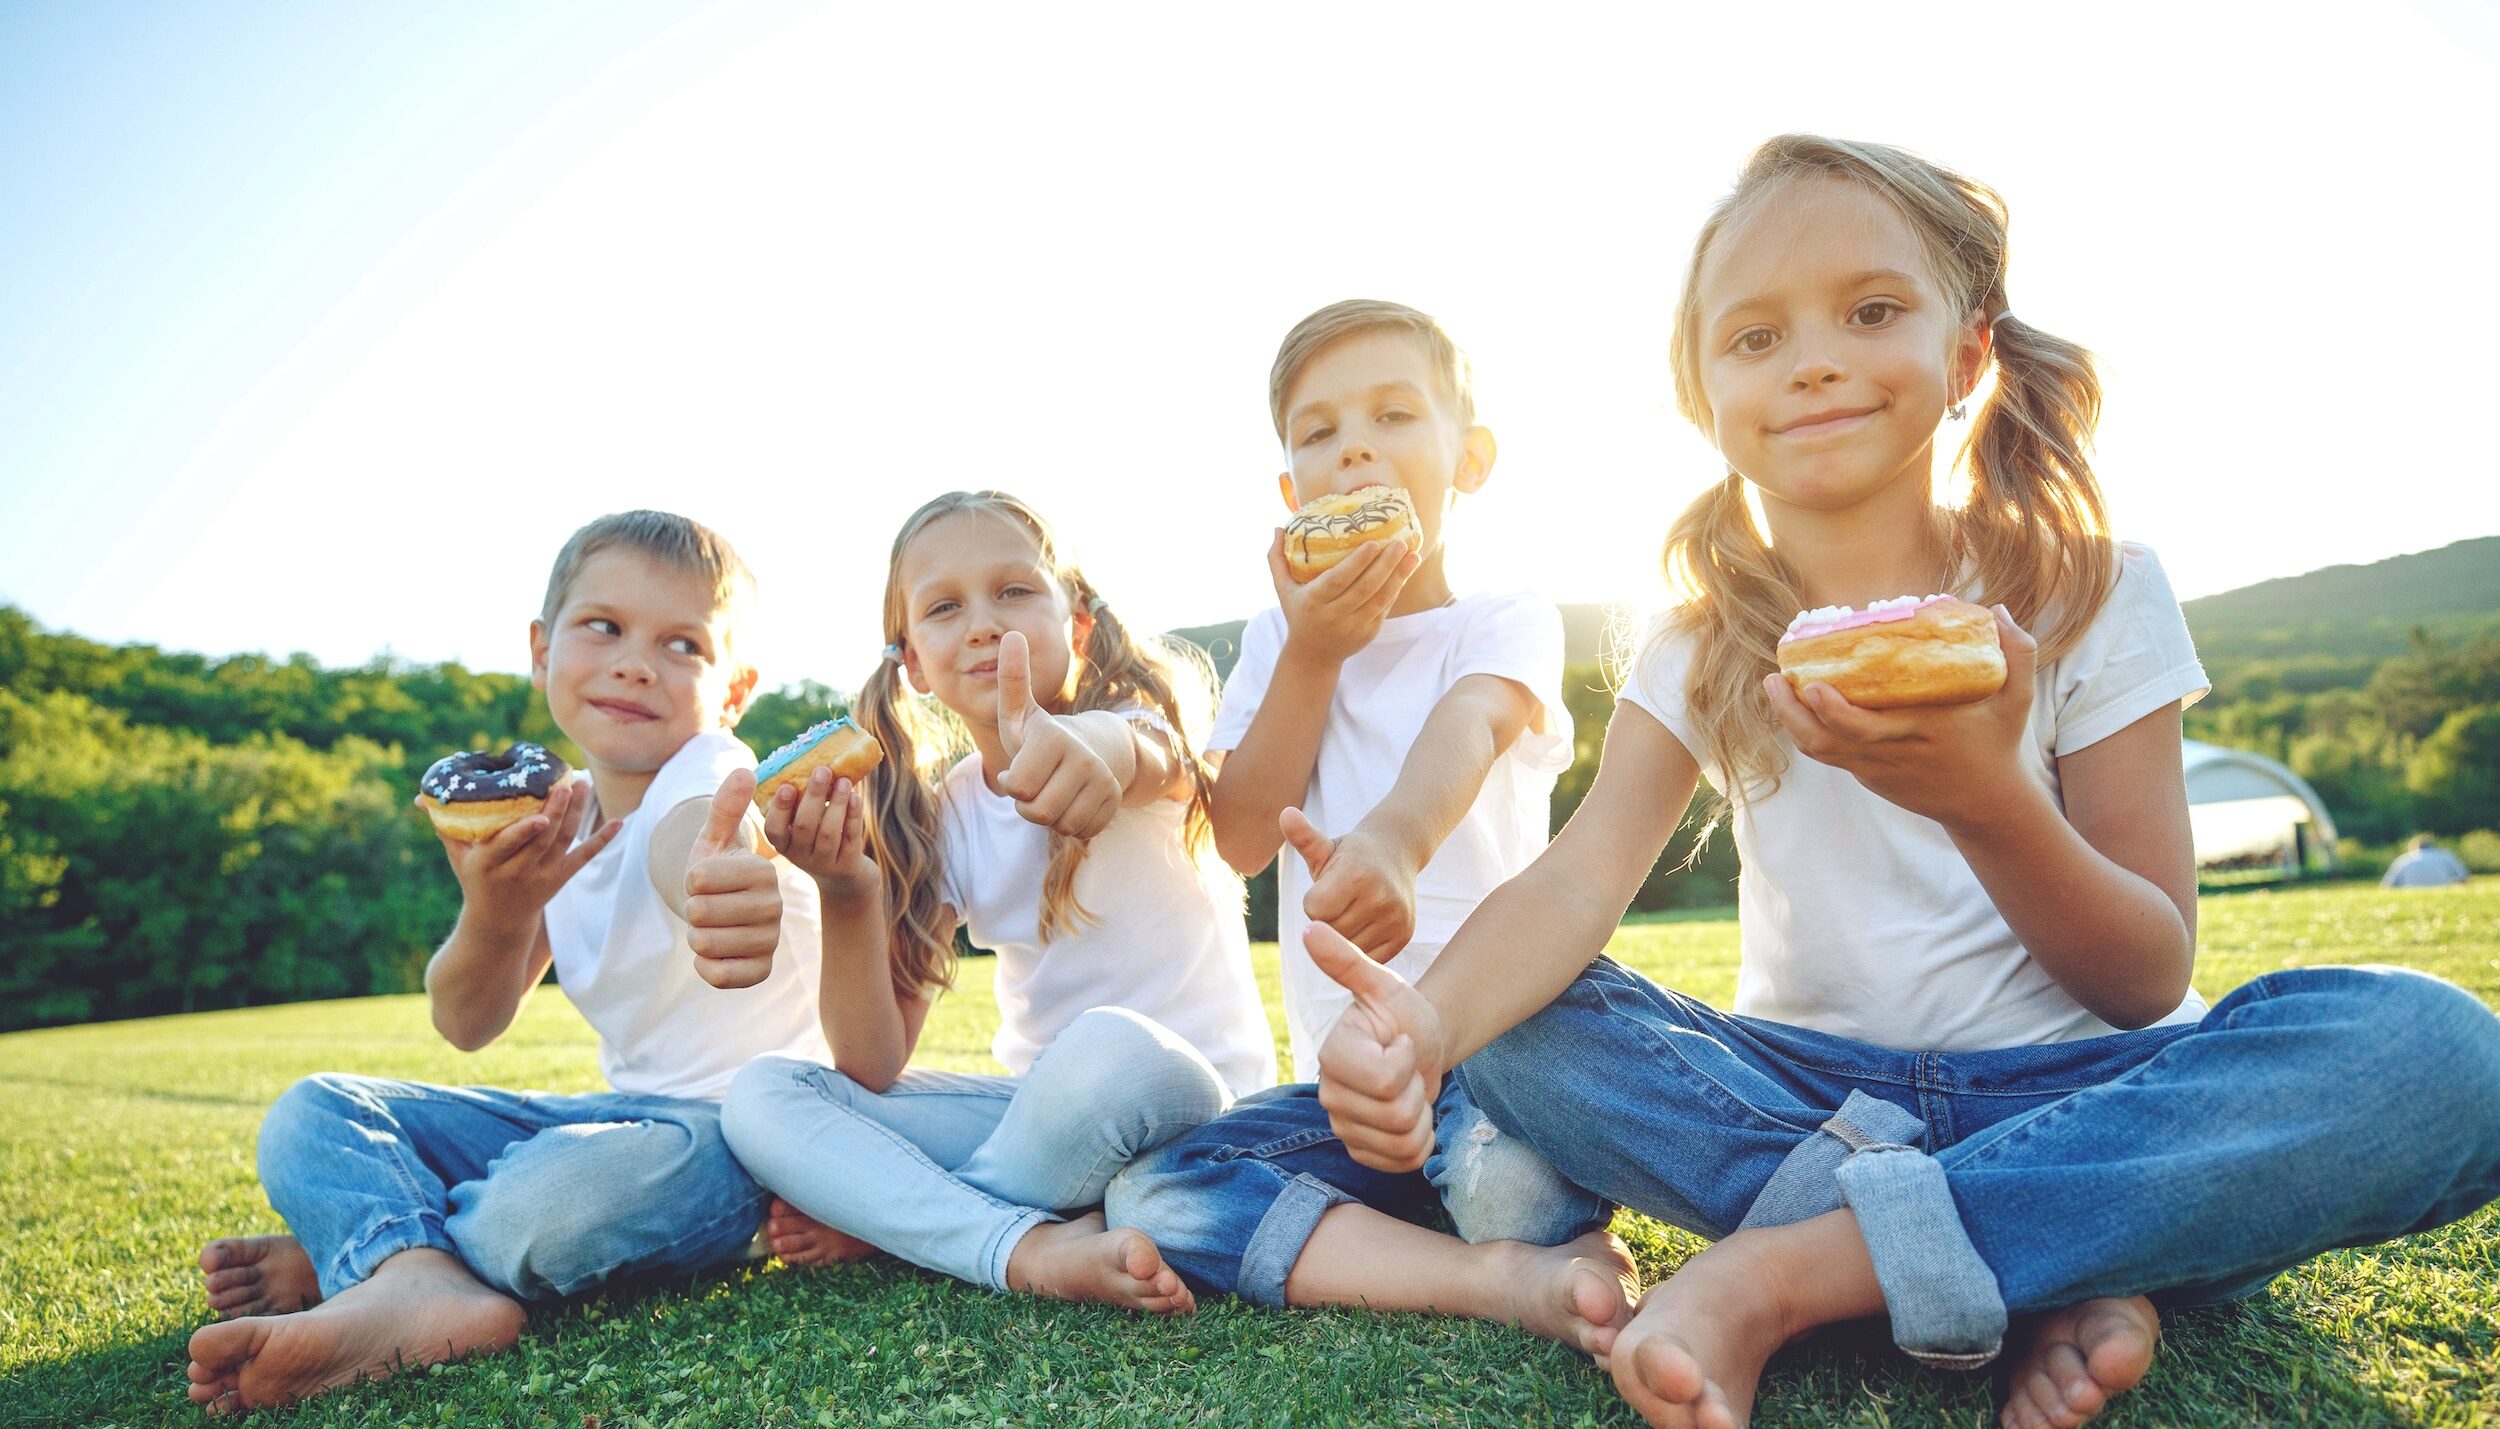 Kids enjoying LaMar's Donuts at Family Picnic | Online Pickup Ordering